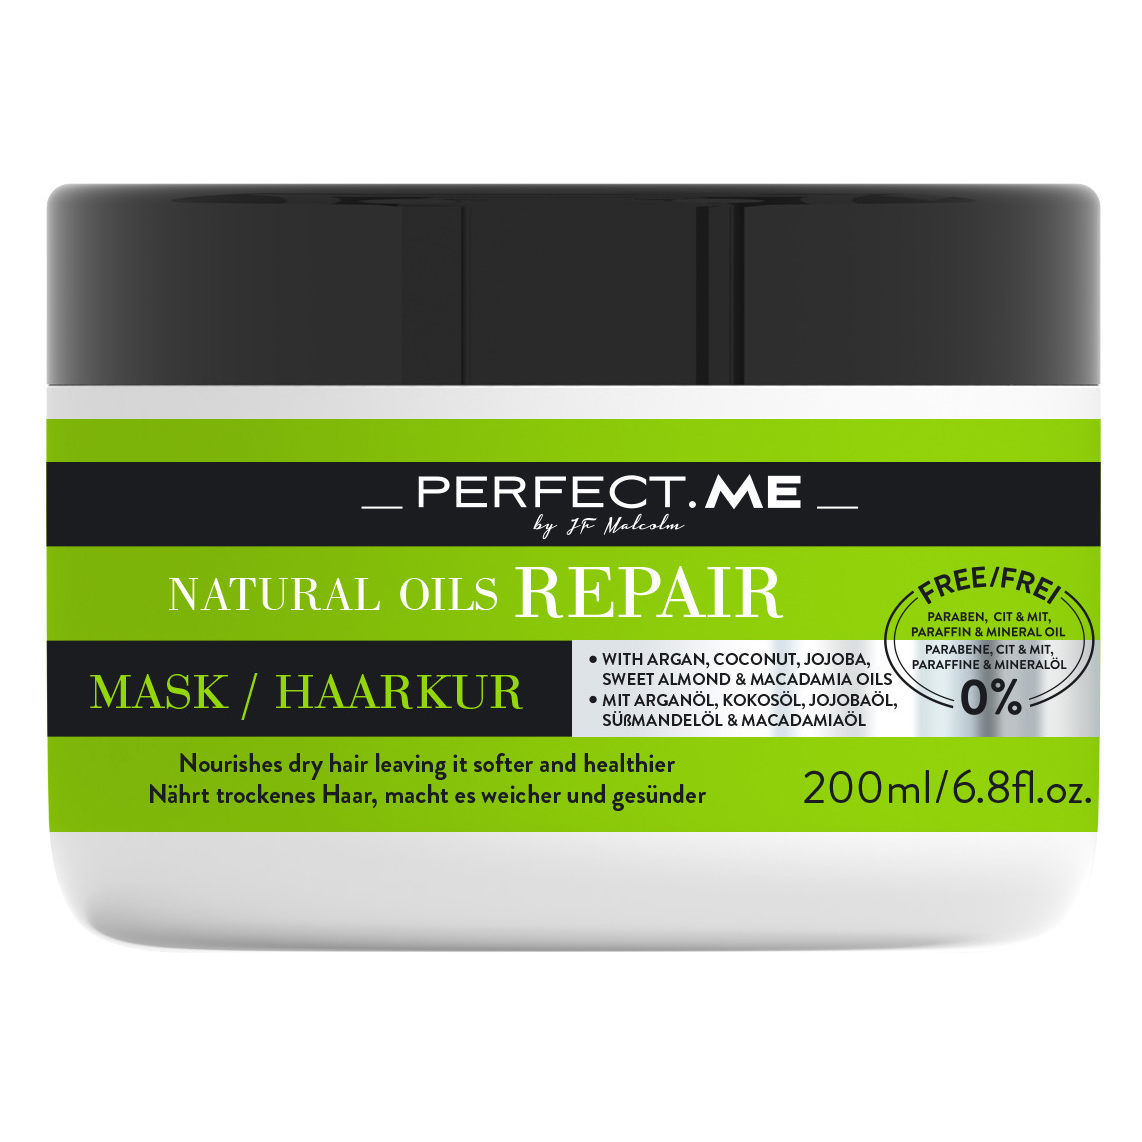 Perfect hair - маска для волос. Repair Mask белый с черной крышкой 1000 мл. Masil 10 Premium Repair hair Mask картинки. Don’t despare Repair маска. Маска для волос repair отзывы